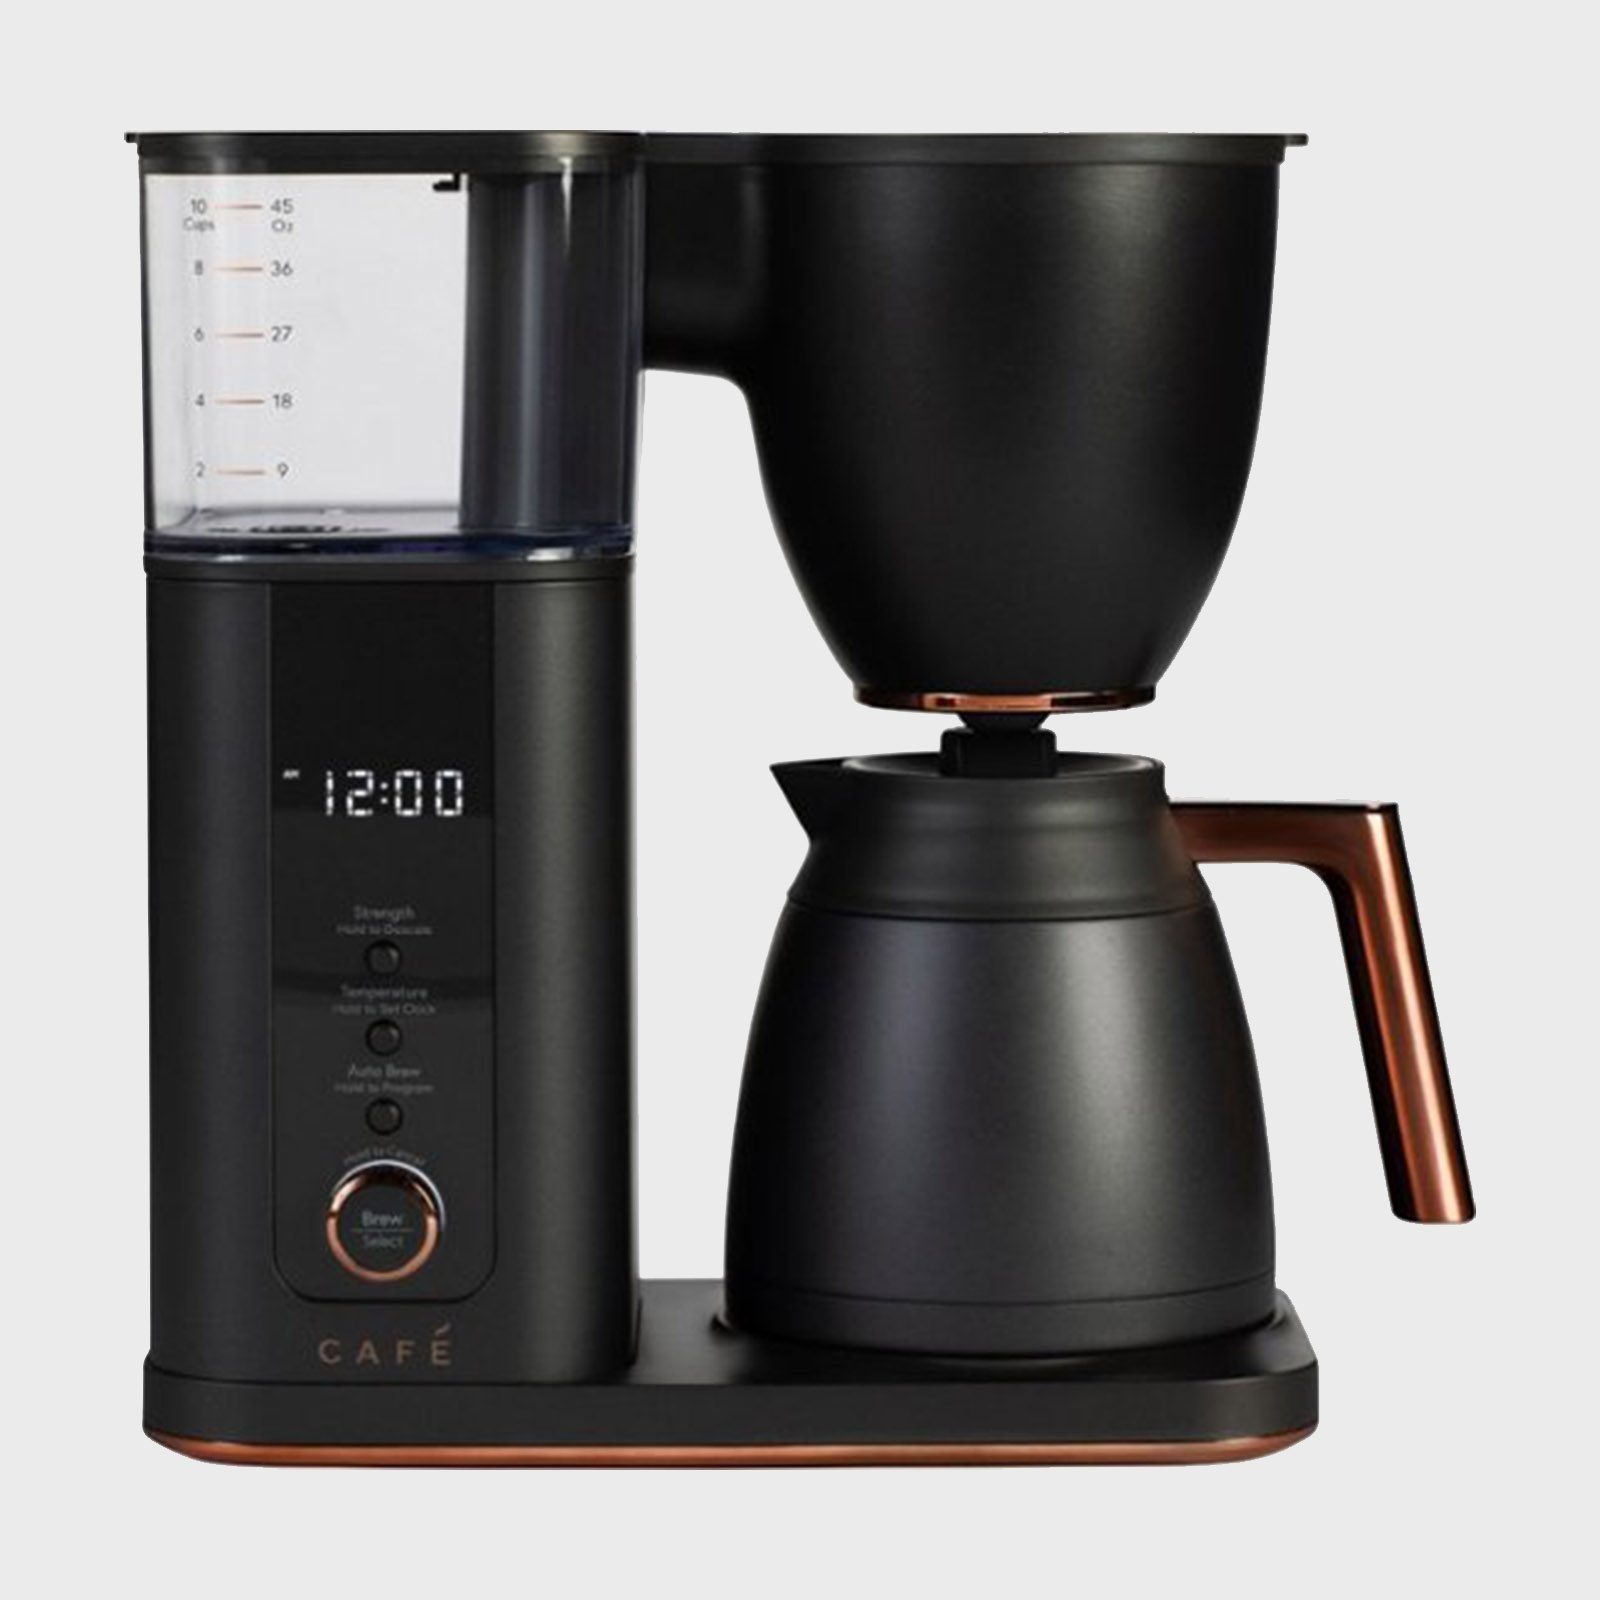 https://www.rd.com/wp-content/uploads/1969/12/Caf%C3%A9-Specialty-Drip-Coffee-Maker-via-bestbuy.jpg?fit=700%2C700